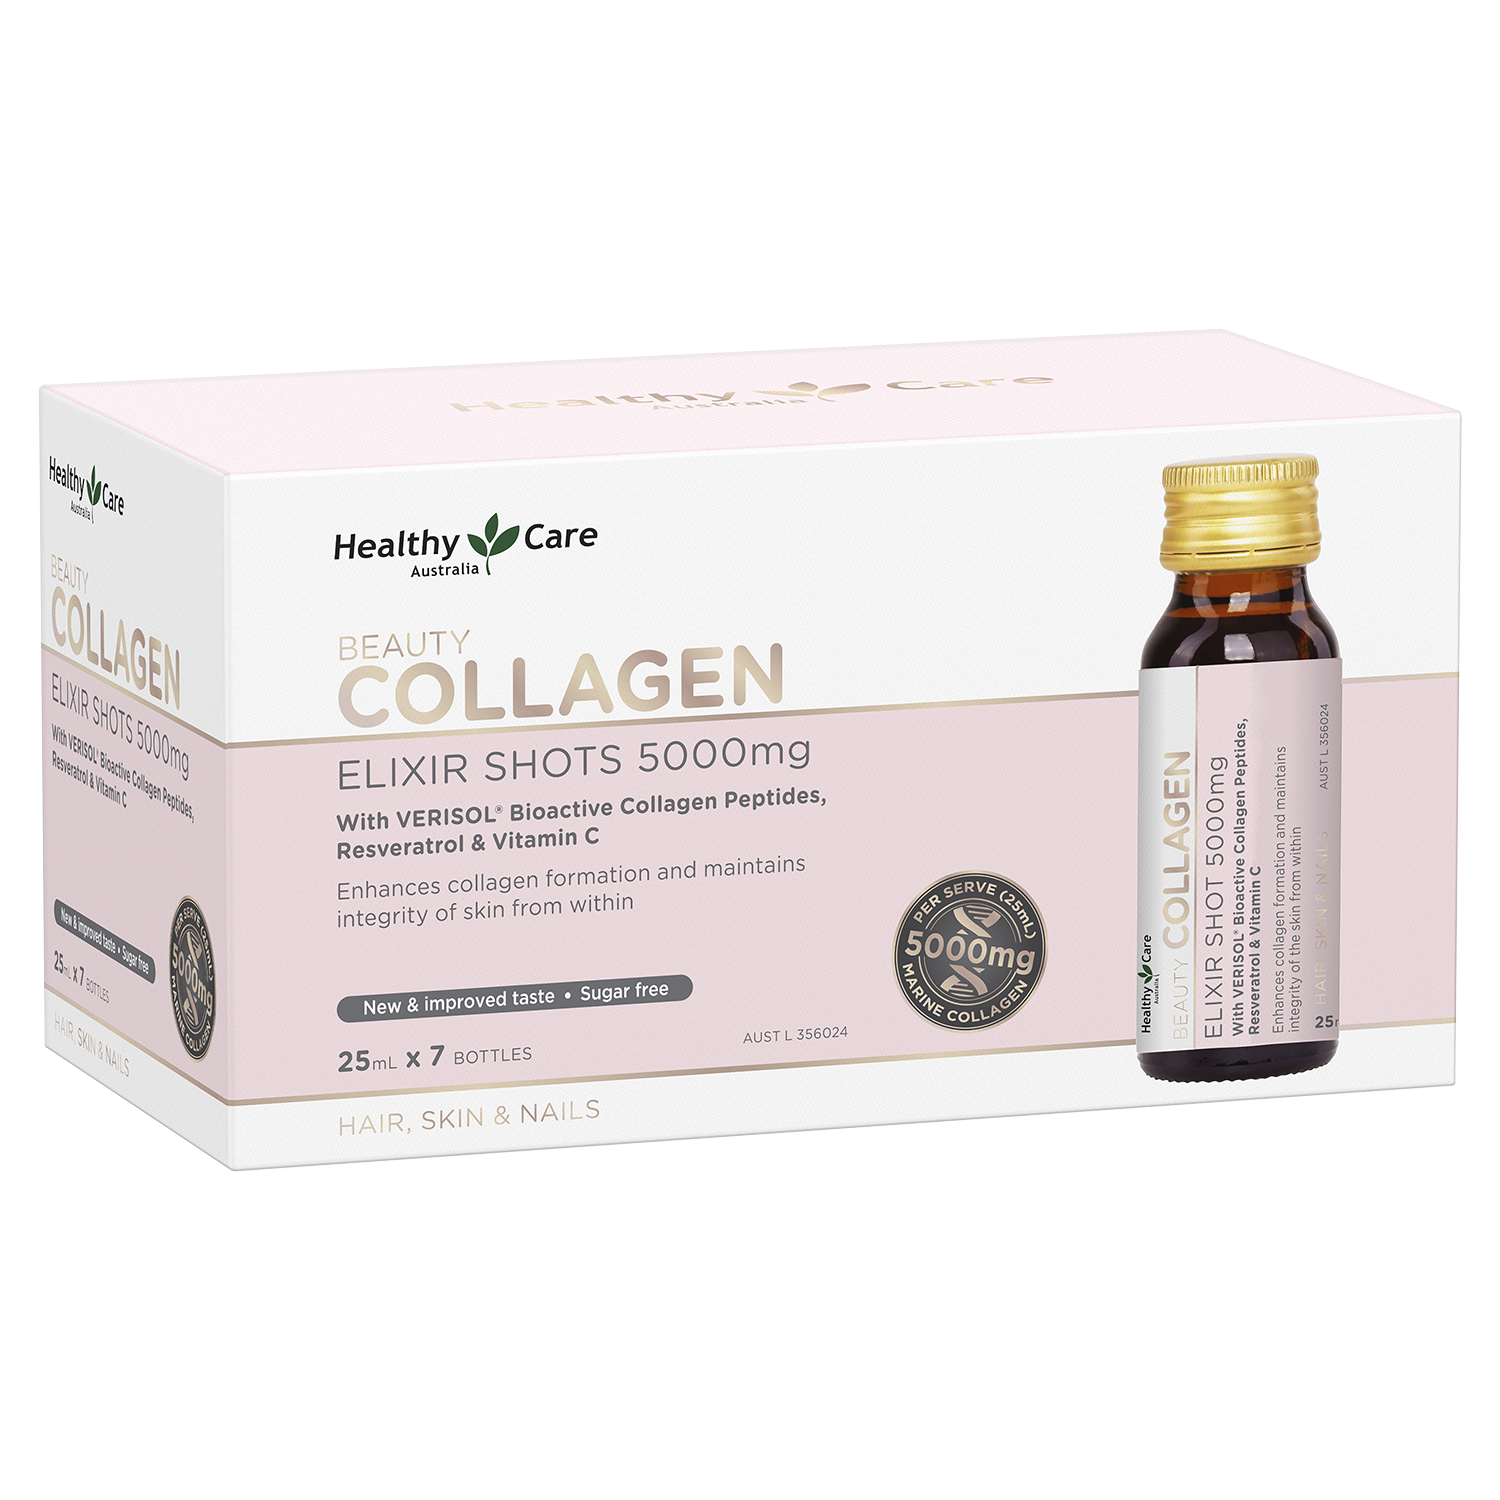 Healthy Care Beauty Collagen Elixir Shots 5,000mg 25mL x 7 bottles-Vitamins & Supplements